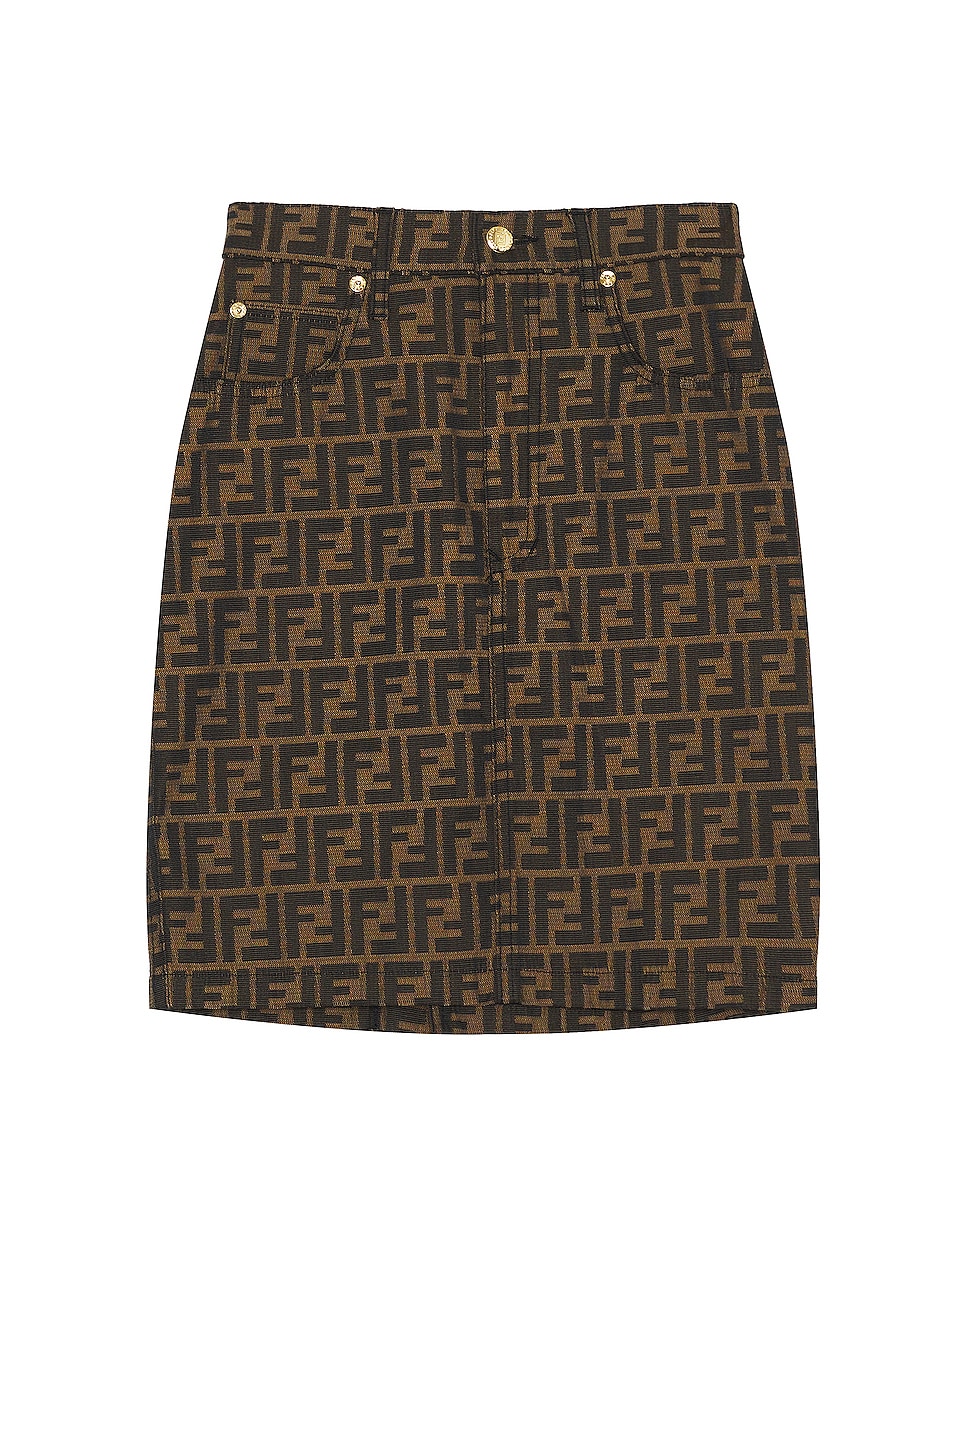 Image 1 of FWRD Renew Fendi Zucca Skirt in Brown